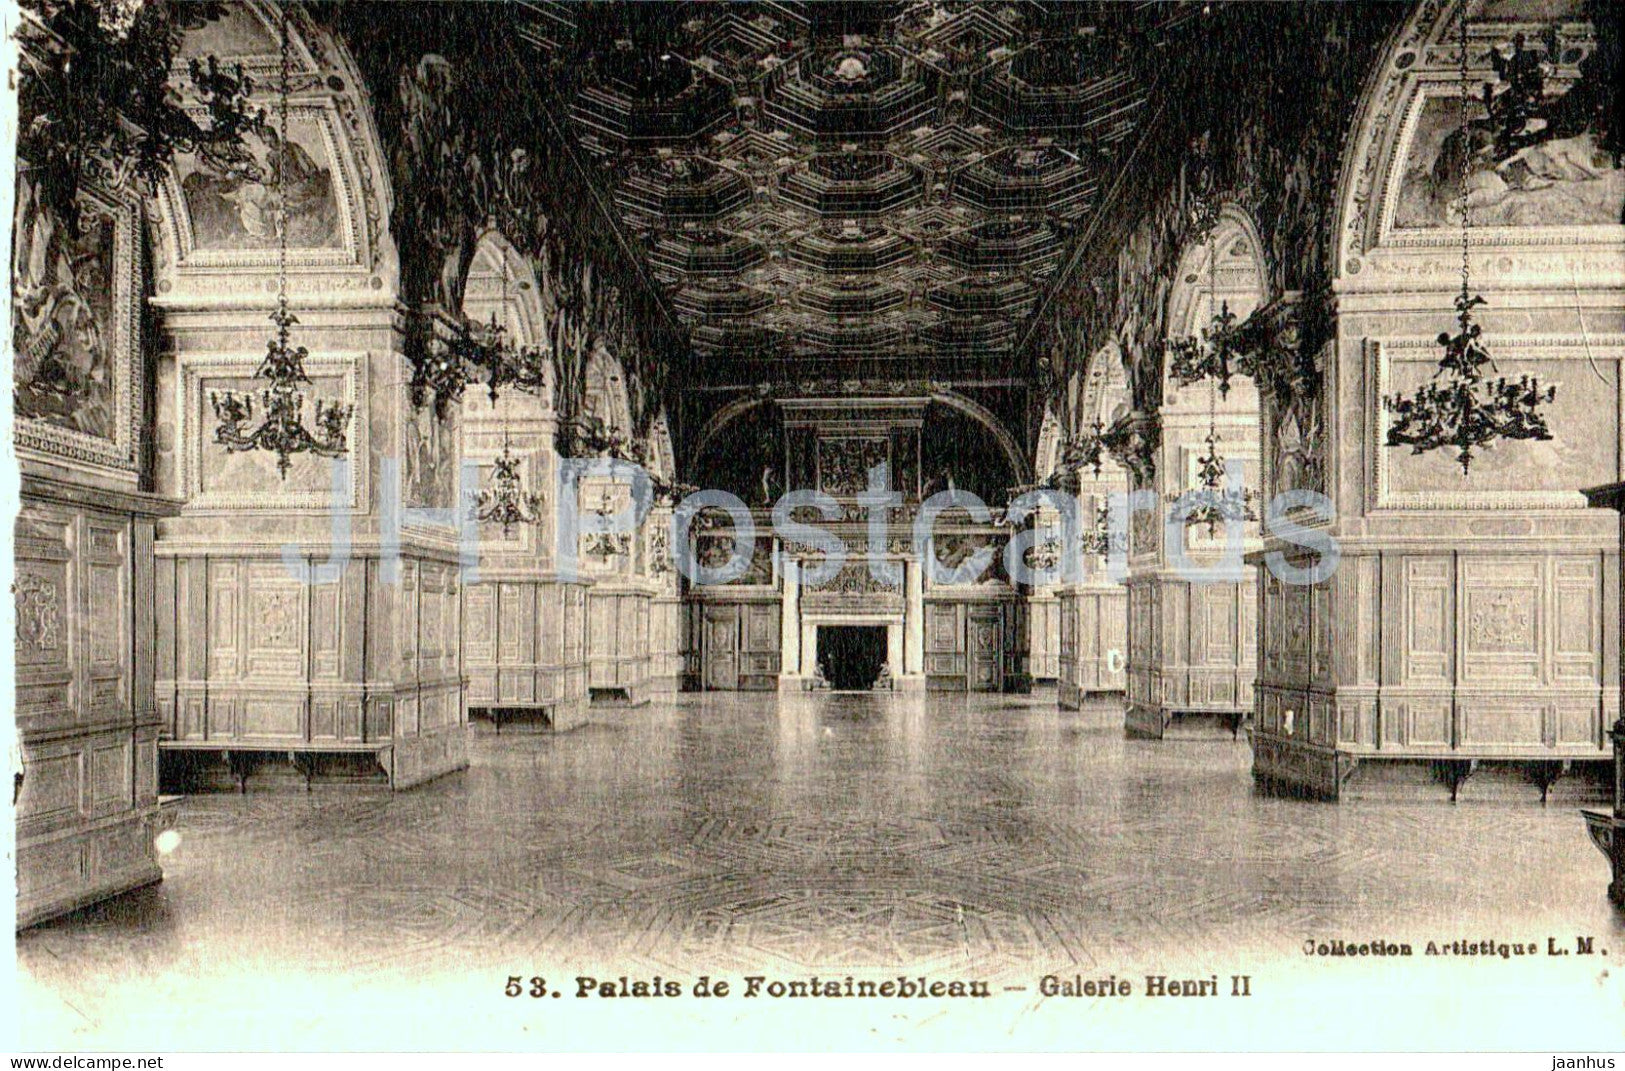 Palais de Fontainebleau - Galerie Henri II - 53 - old postcard - France - unused - JH Postcards